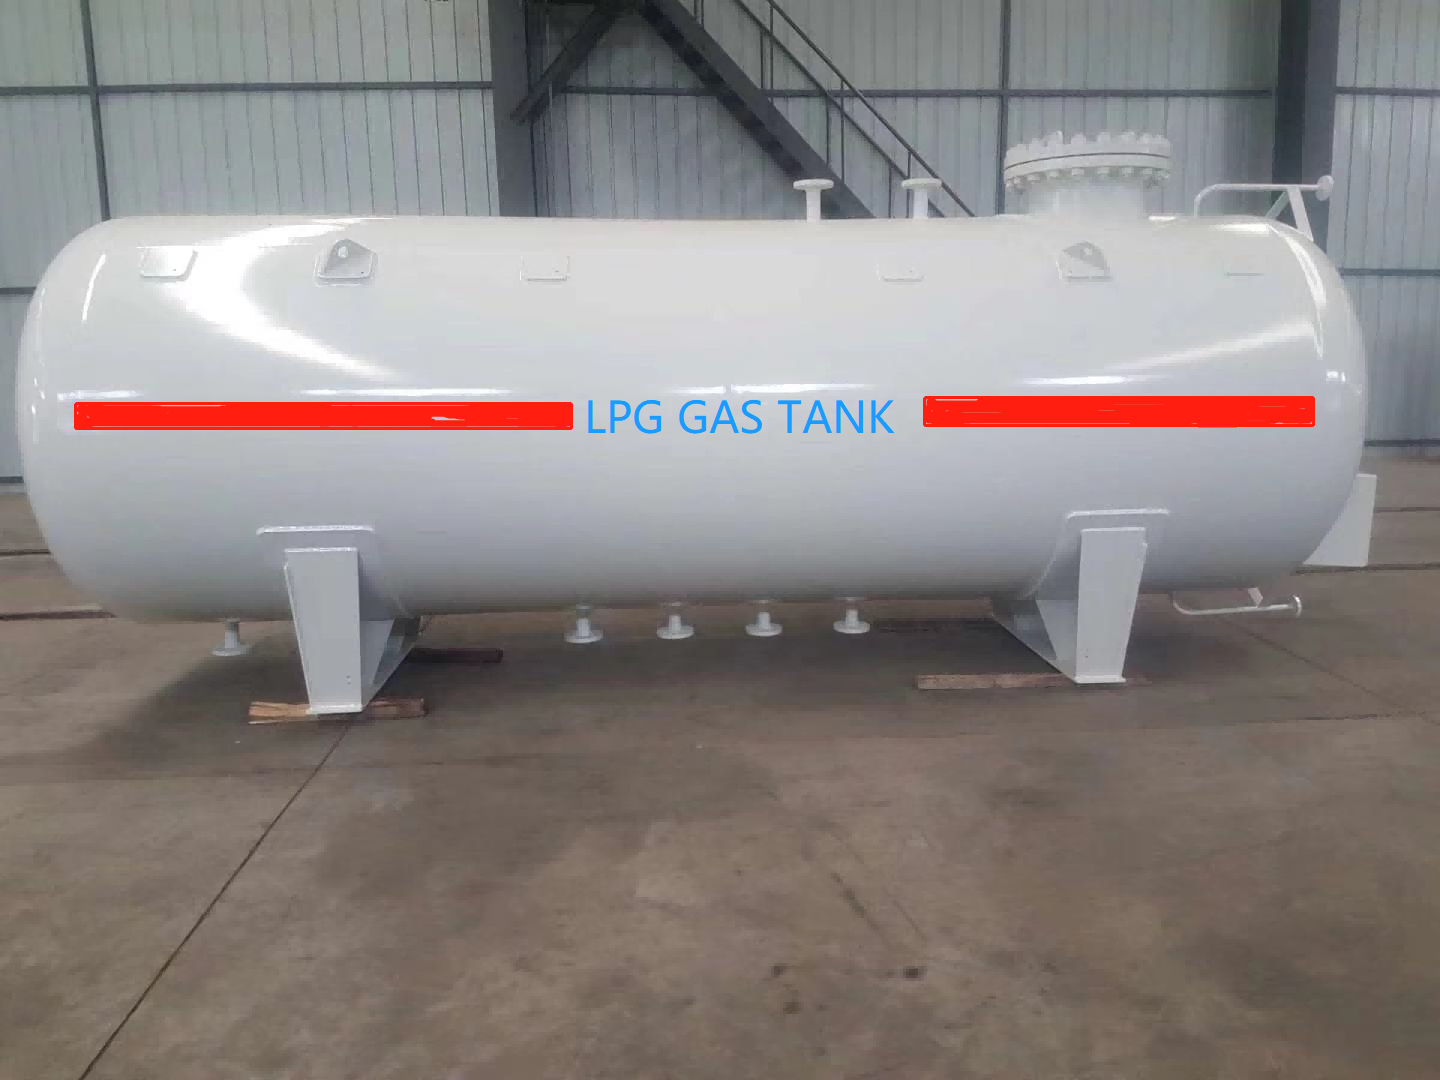 Design service life of LPG storage tanks